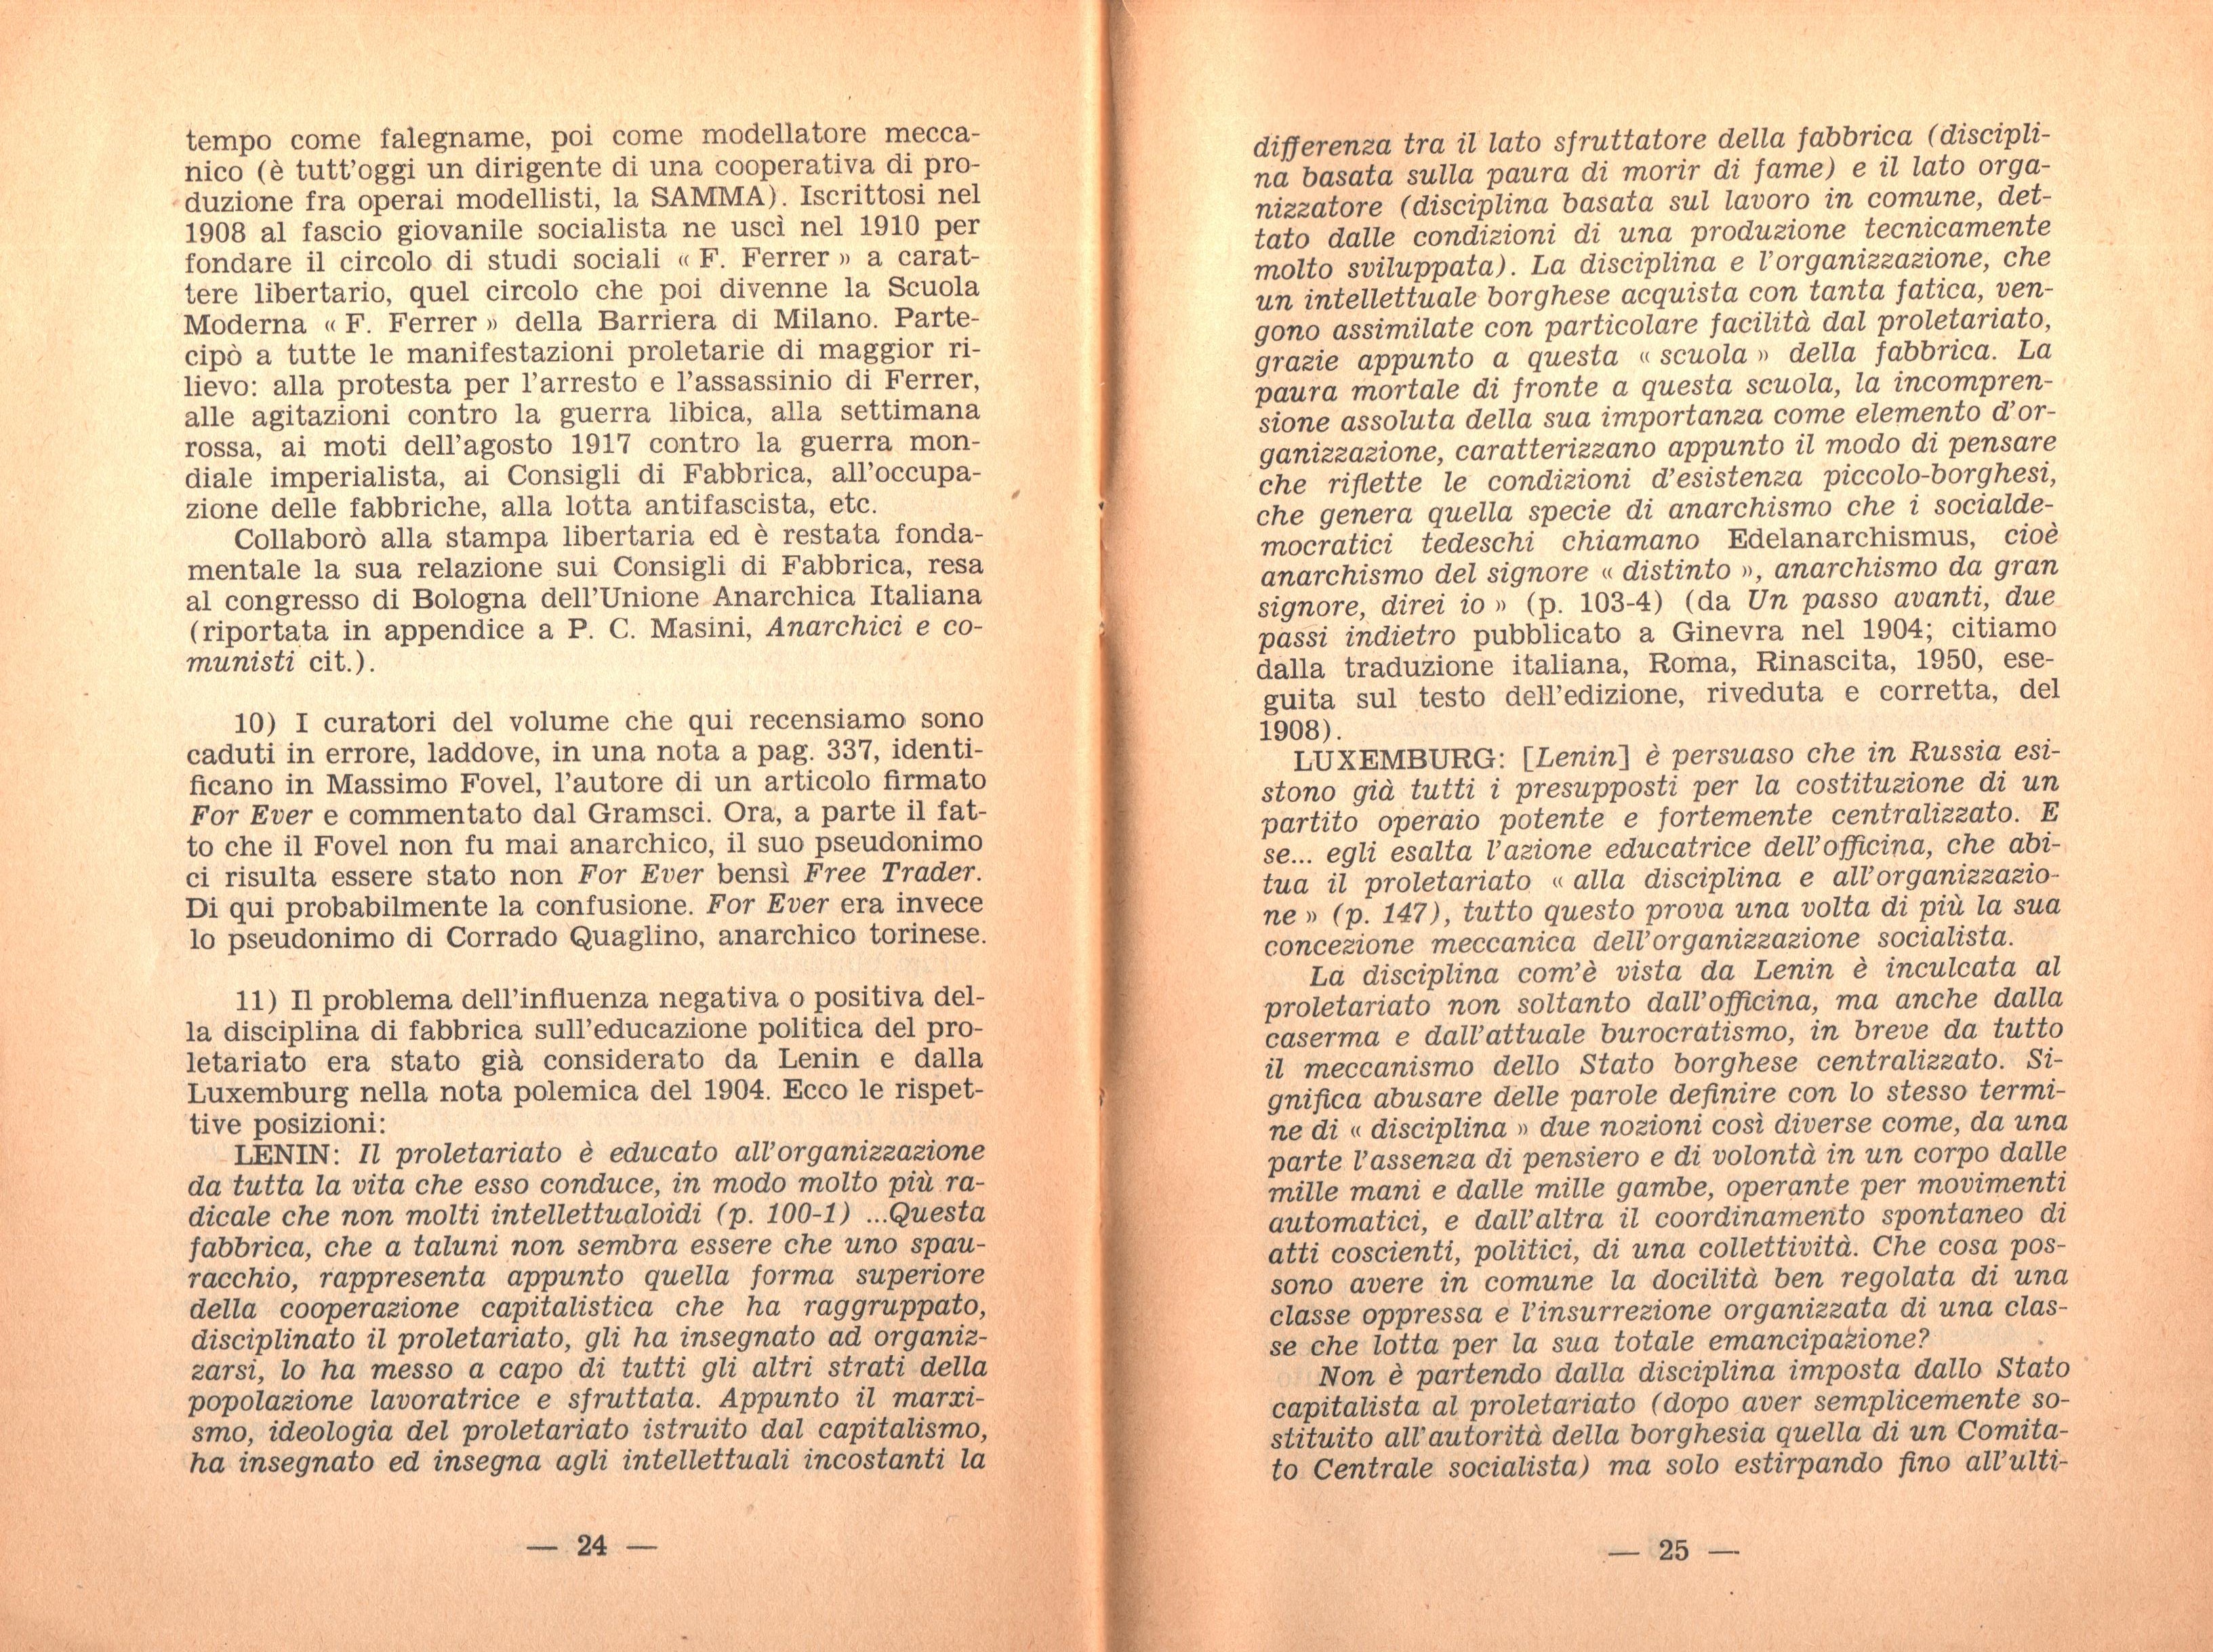 Pier Carlo Masini, Antonio Gramsci - pag. 14